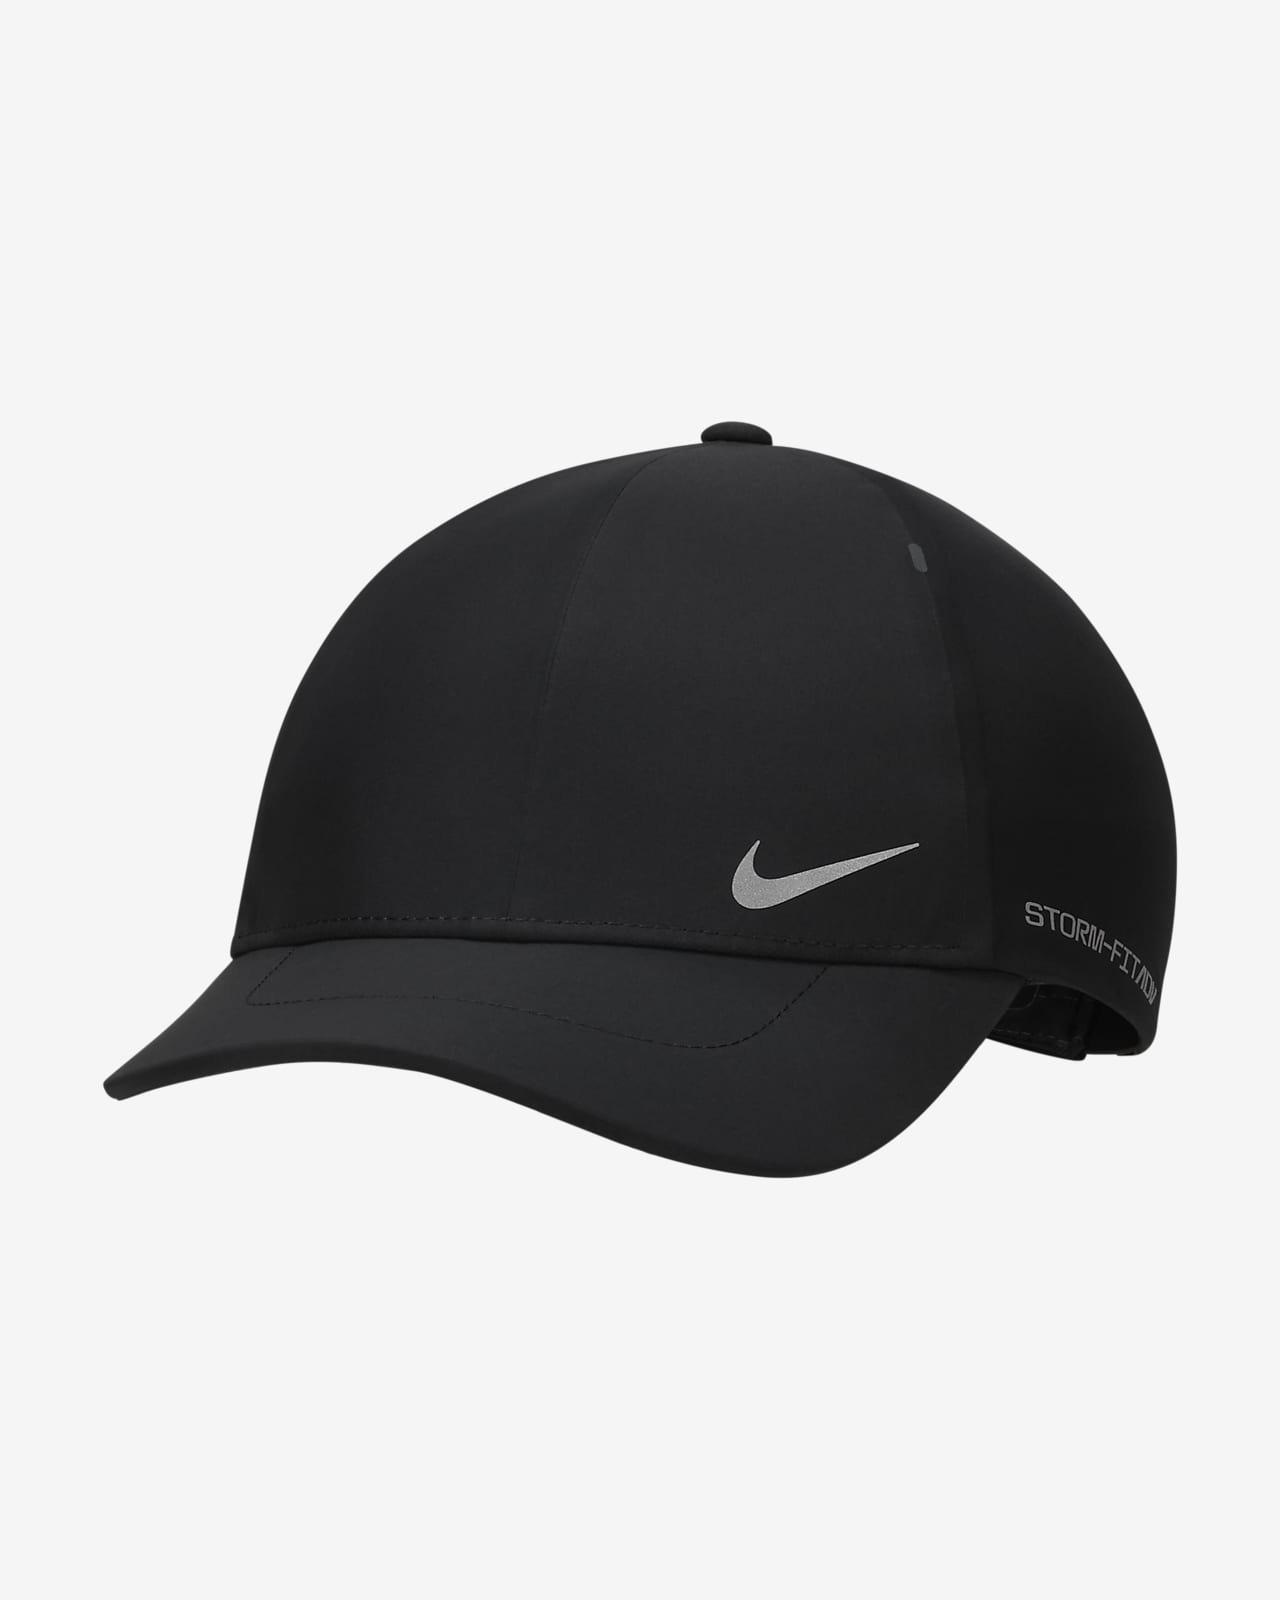 Storm-FIT Club Structured Cap. Nike.com